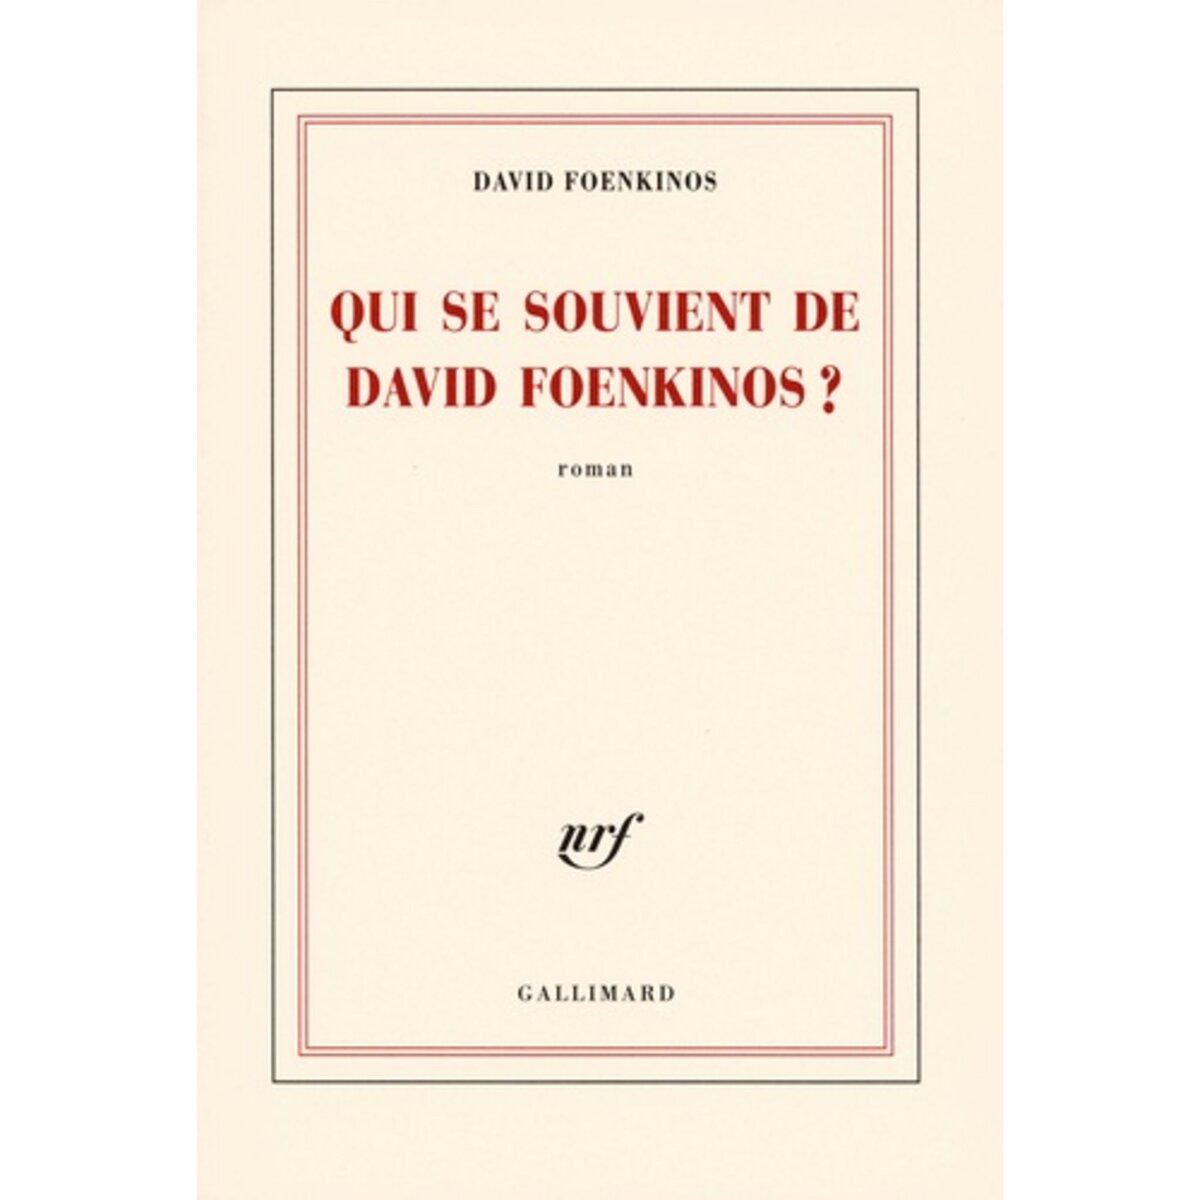  QUI SE SOUVIENT DE DAVID FOENKINOS ?, Foenkinos David